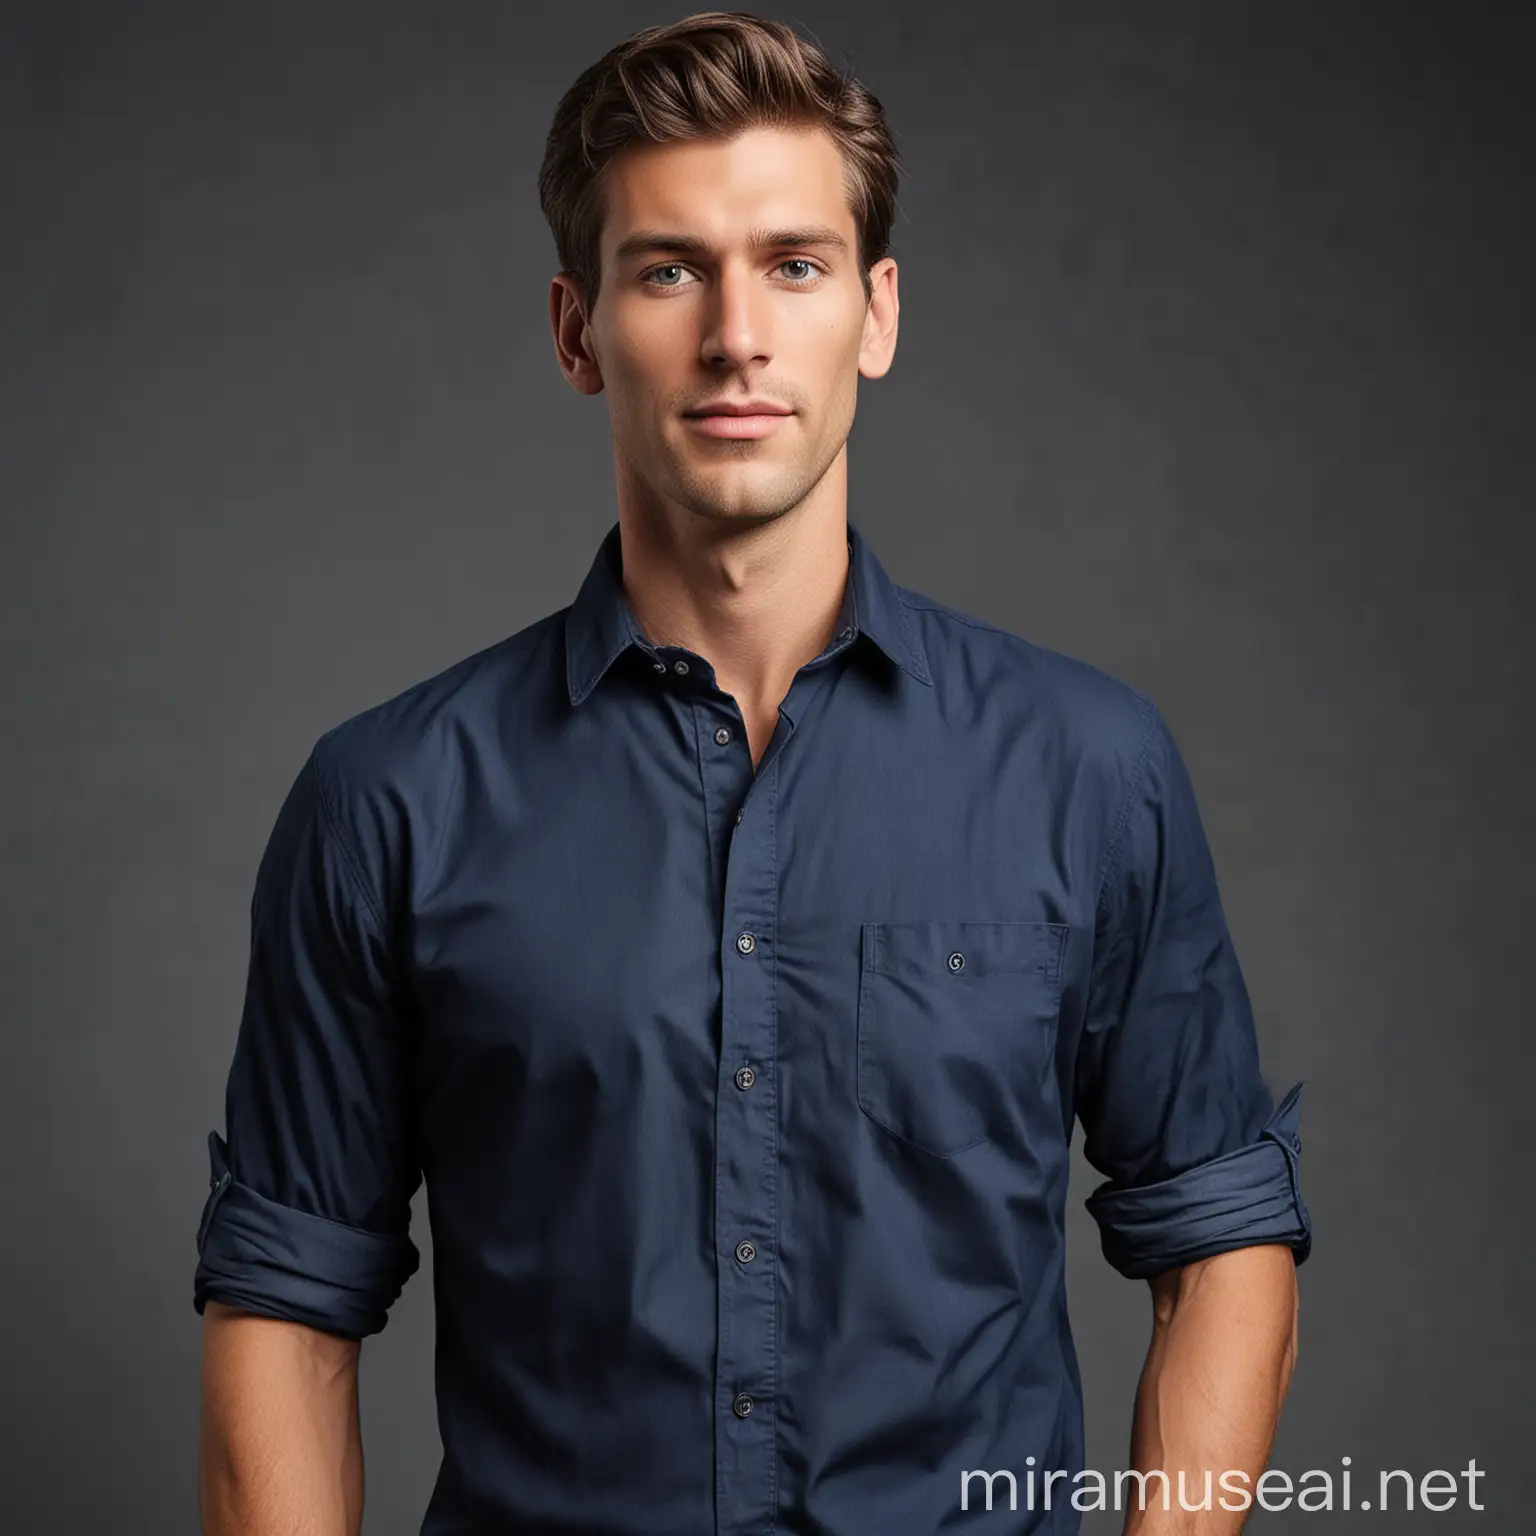 Stylish Handsome Man in Navy Blue Shirt Portrait